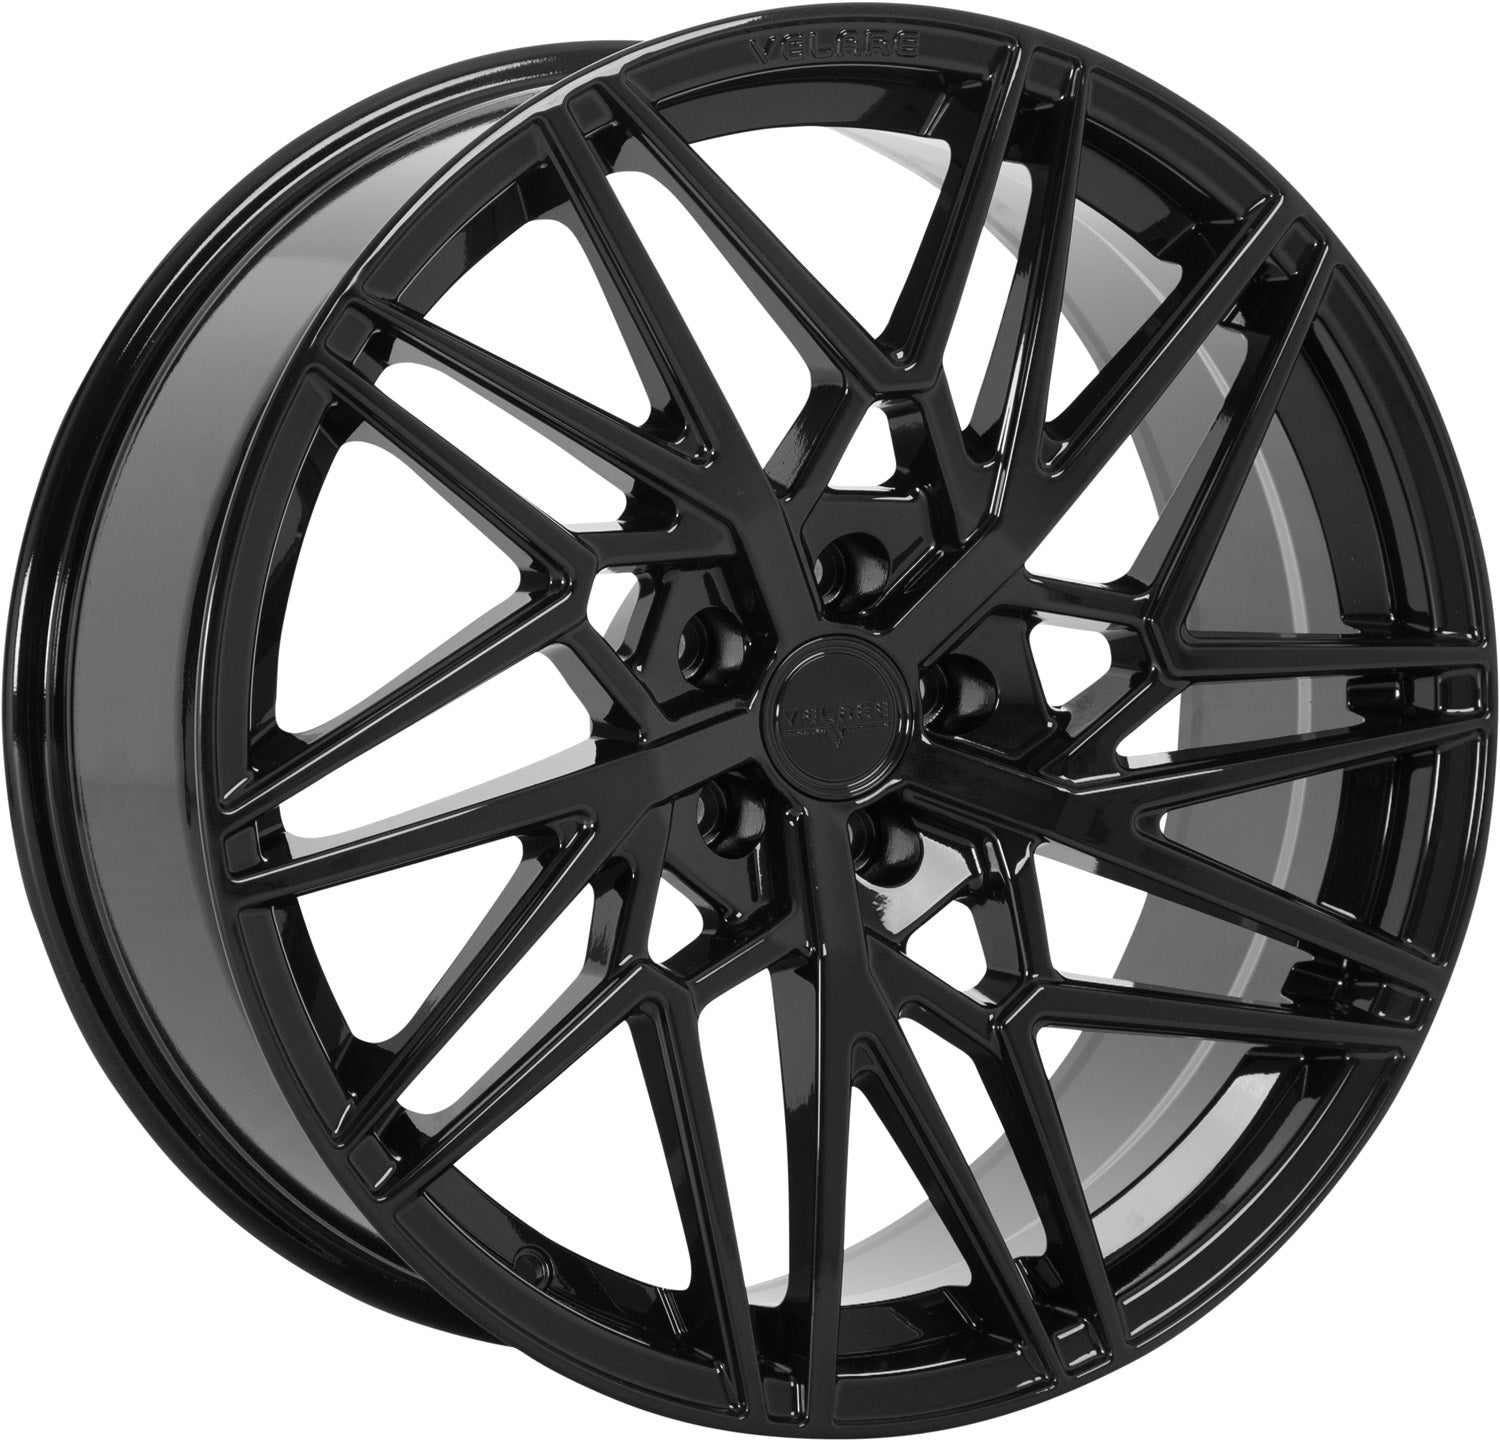 VLR06 Wheel and Tyre Package-Motor Vehicle Rims & Wheels-Velare- DC Leisure